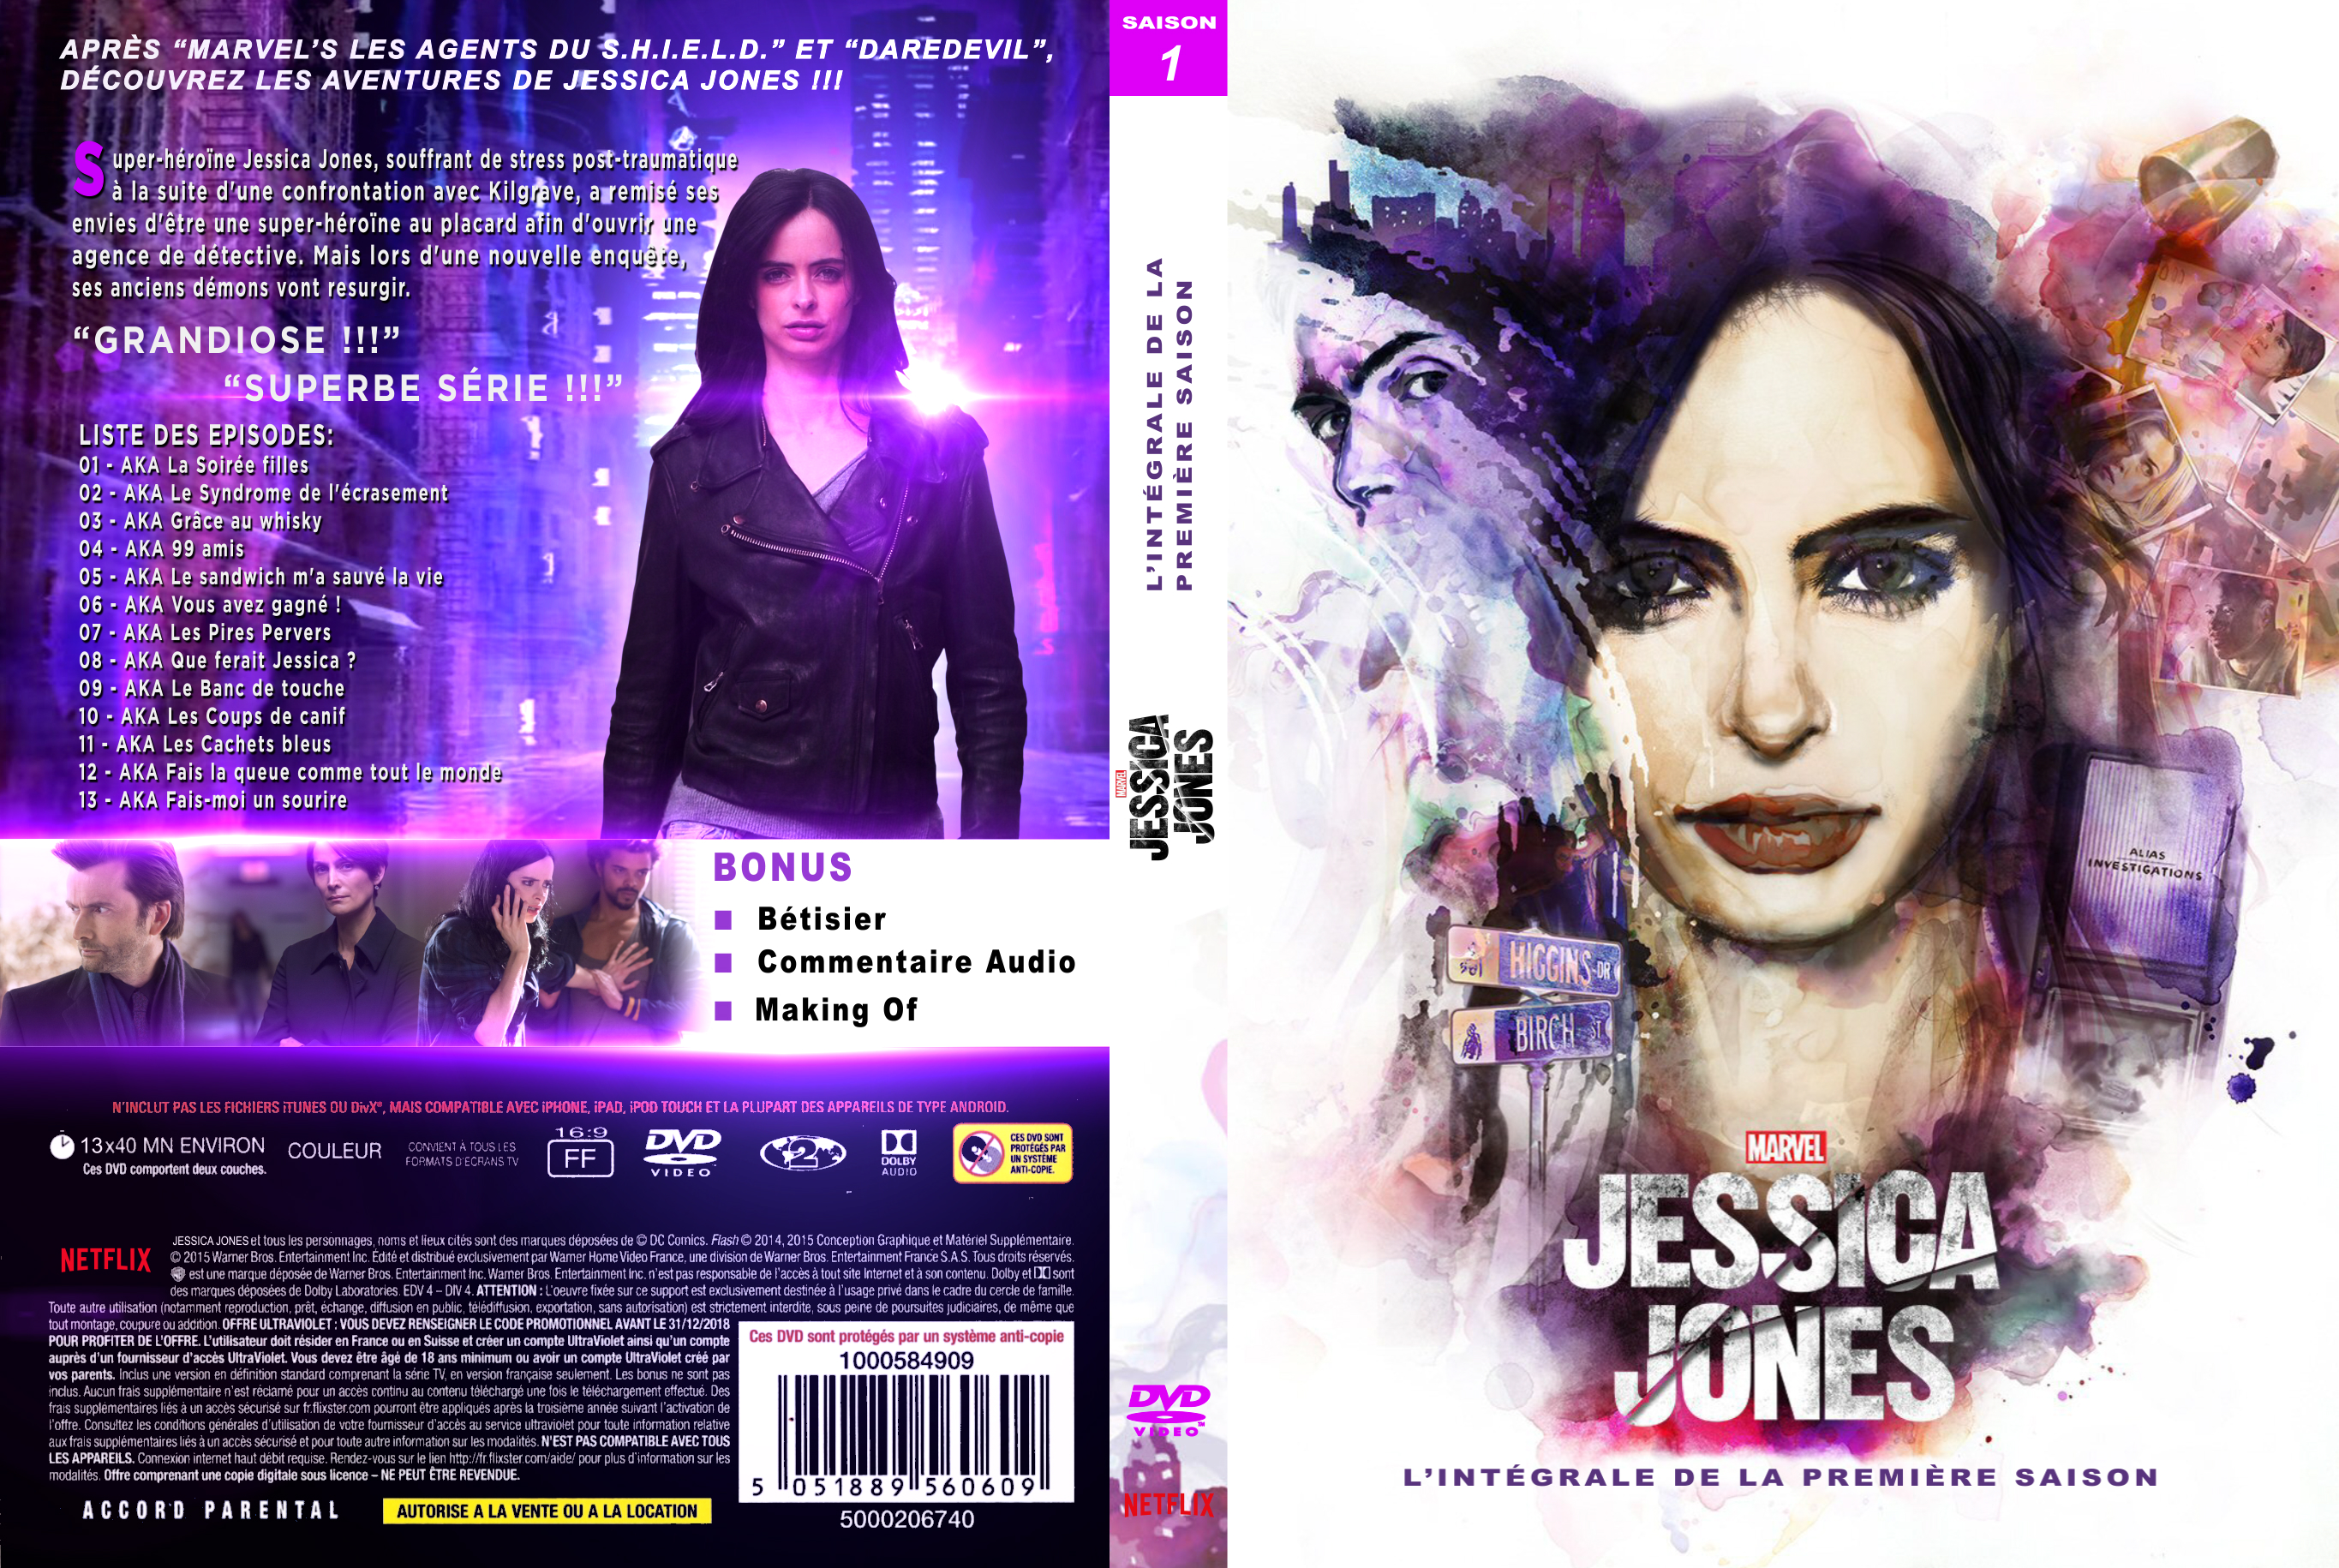 Jaquette DVD Jessica Jones saison 1 custom v2